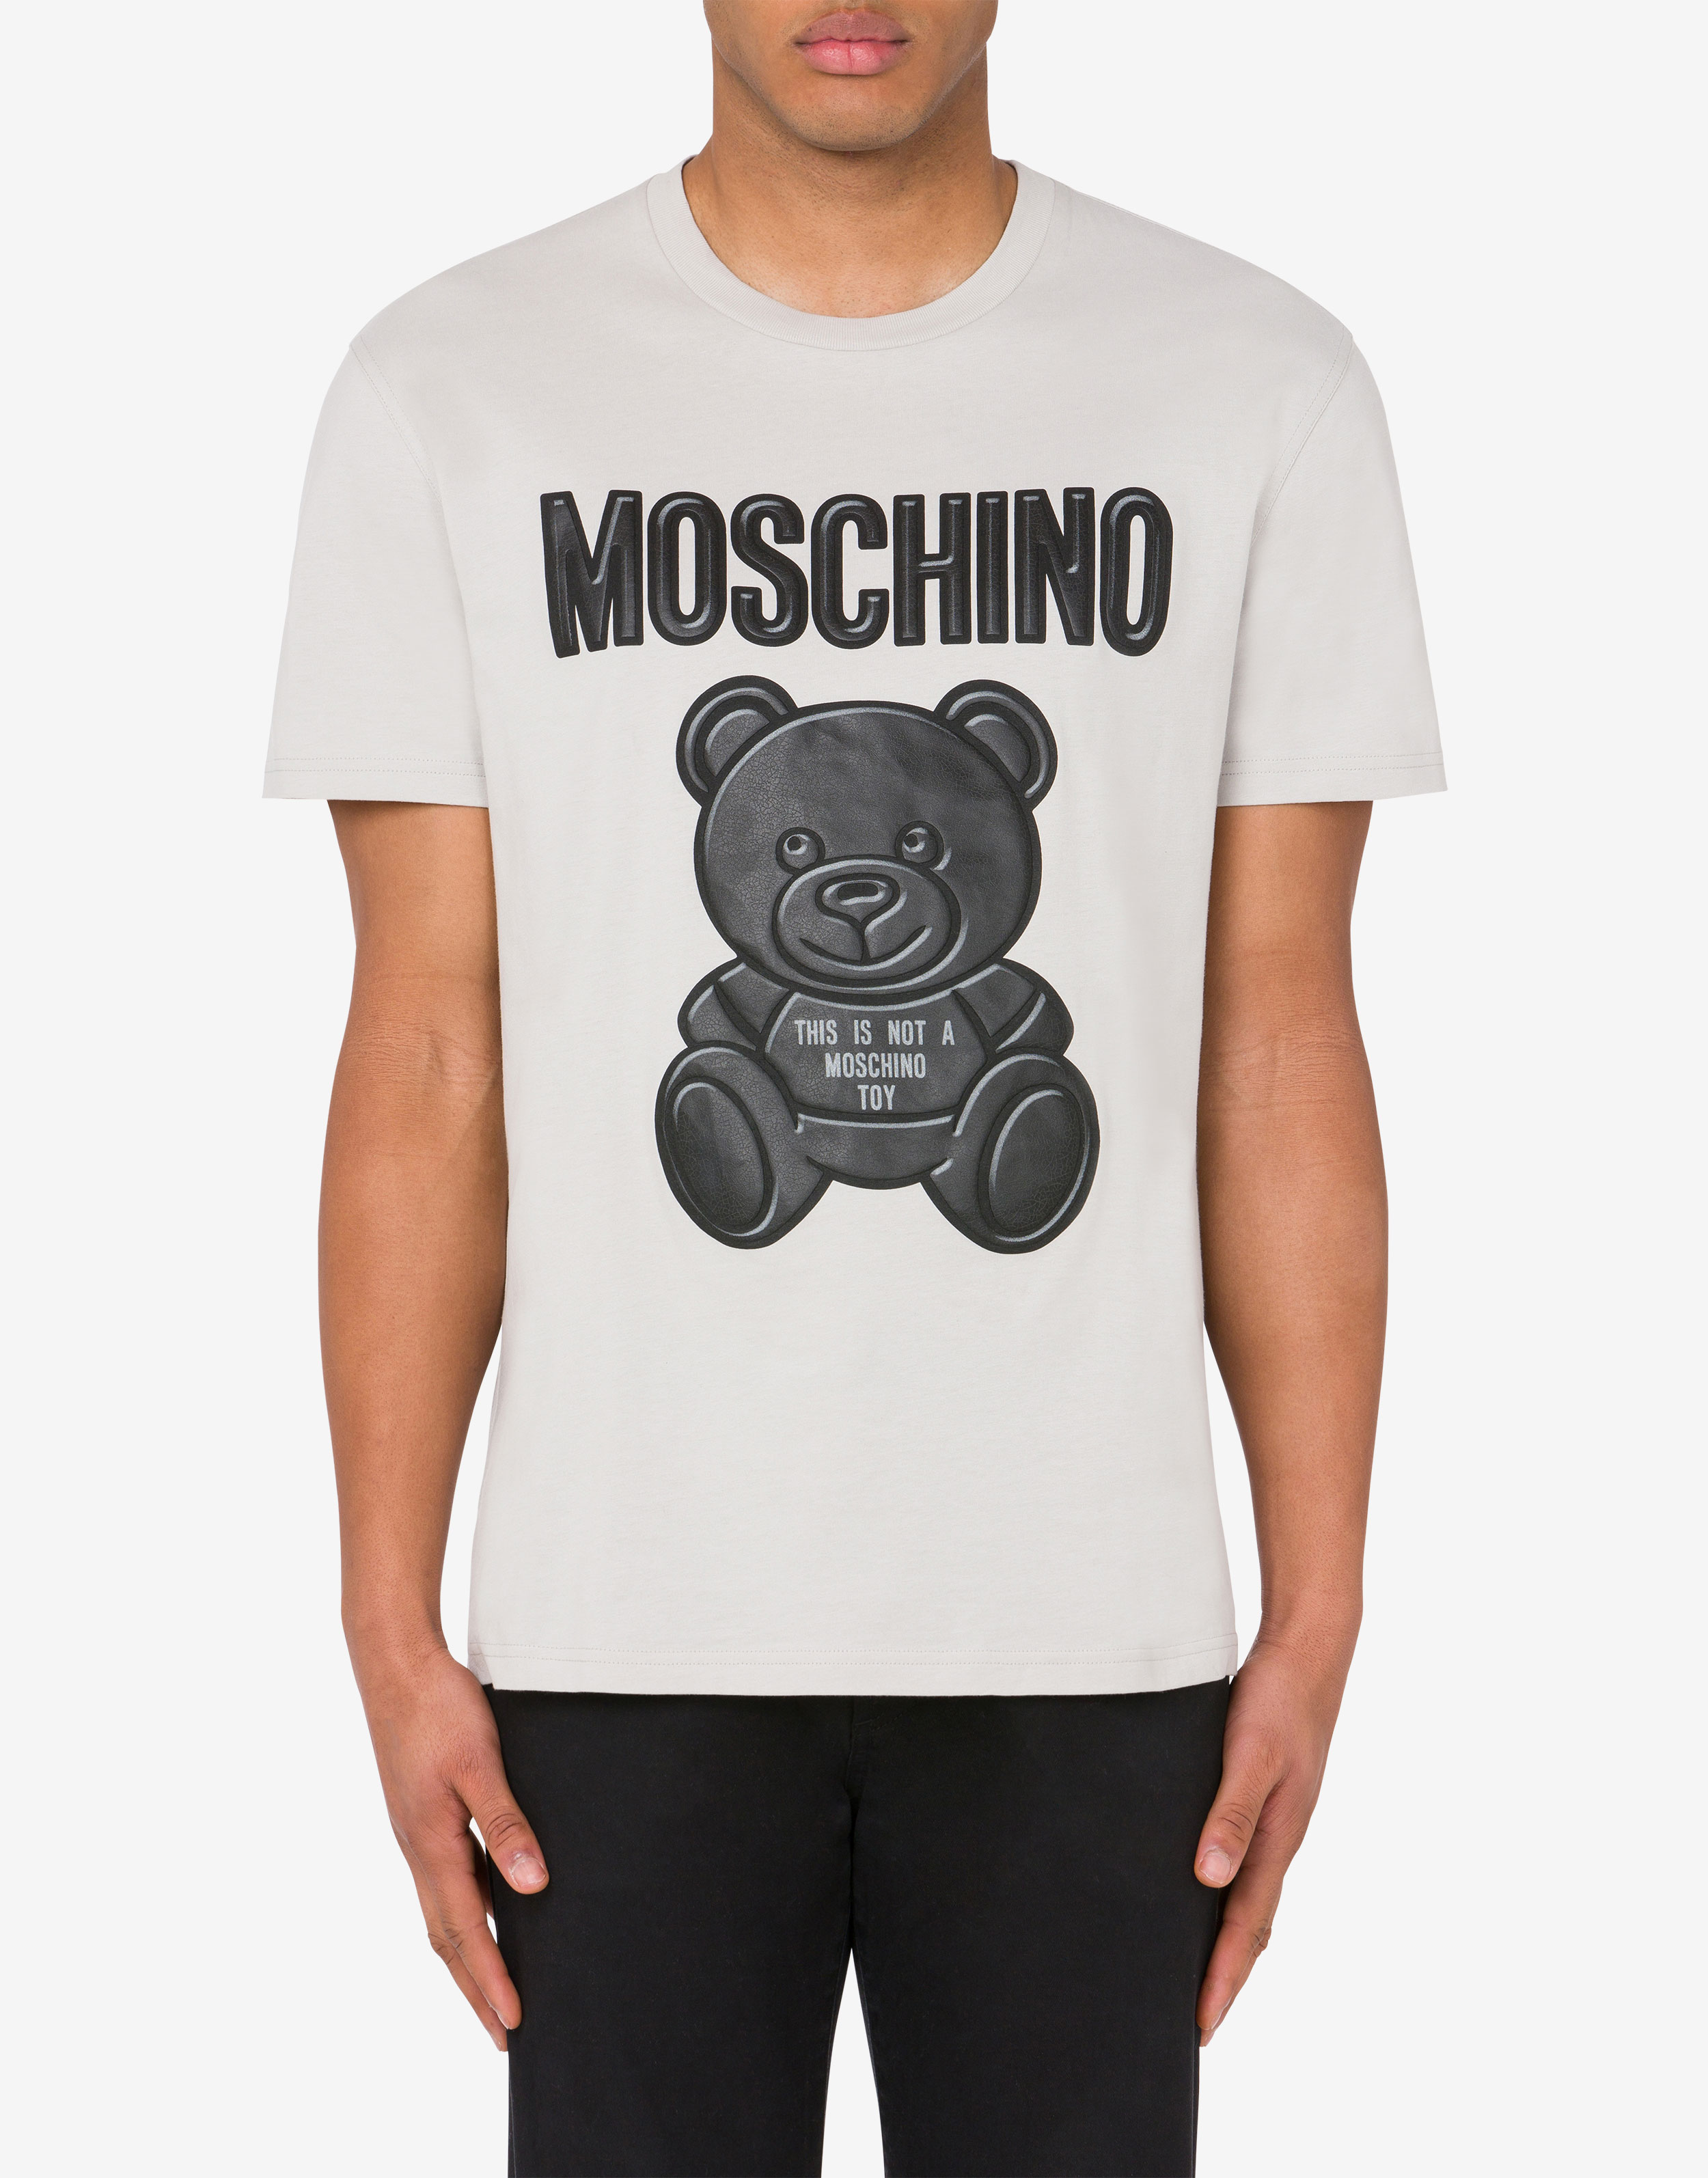 Moschino Teddy Bear organic cotton T-shirt and leggings co-ord set